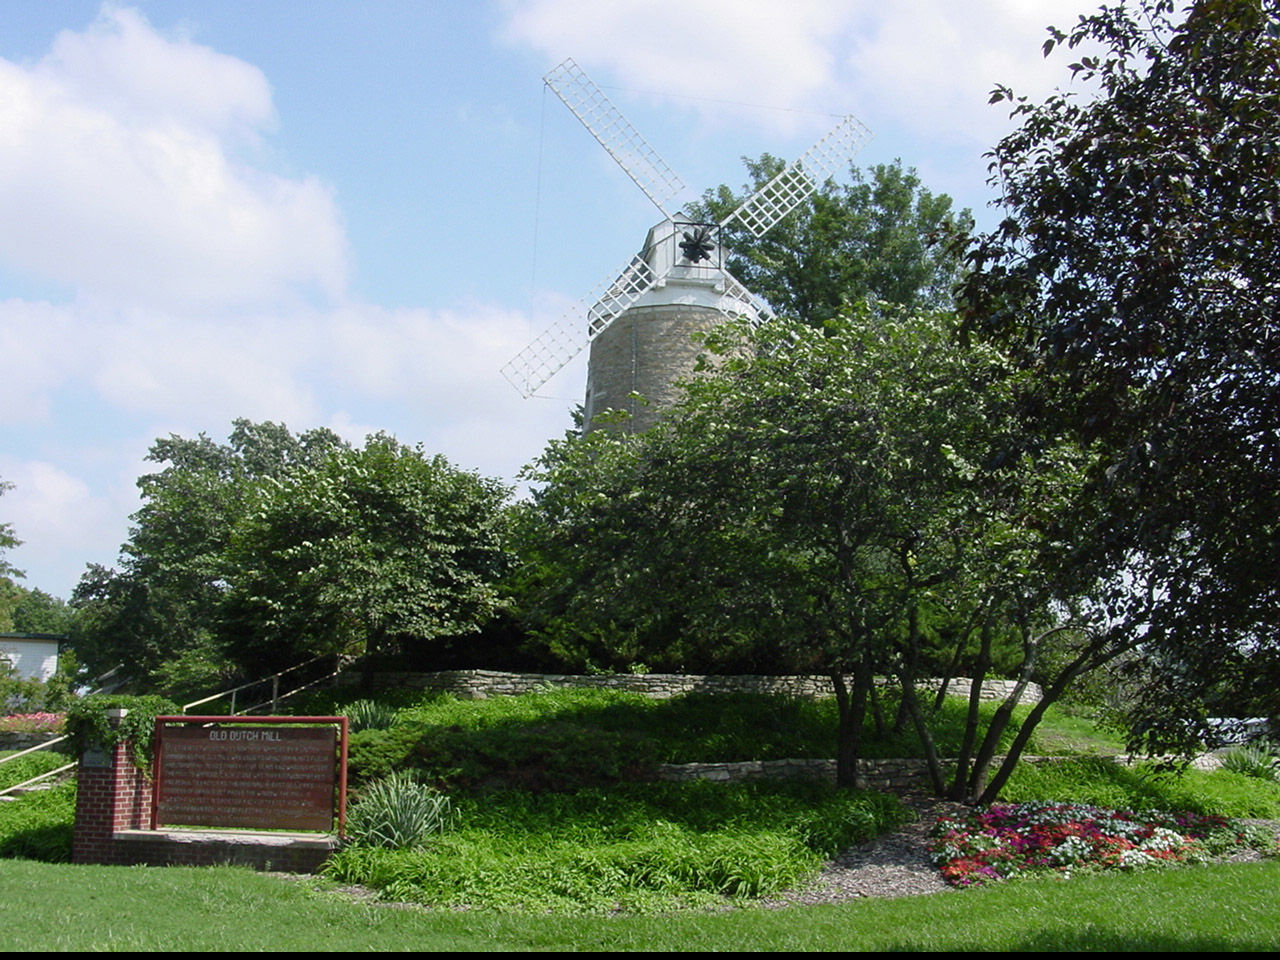  Schonhoff Dutch Mill image